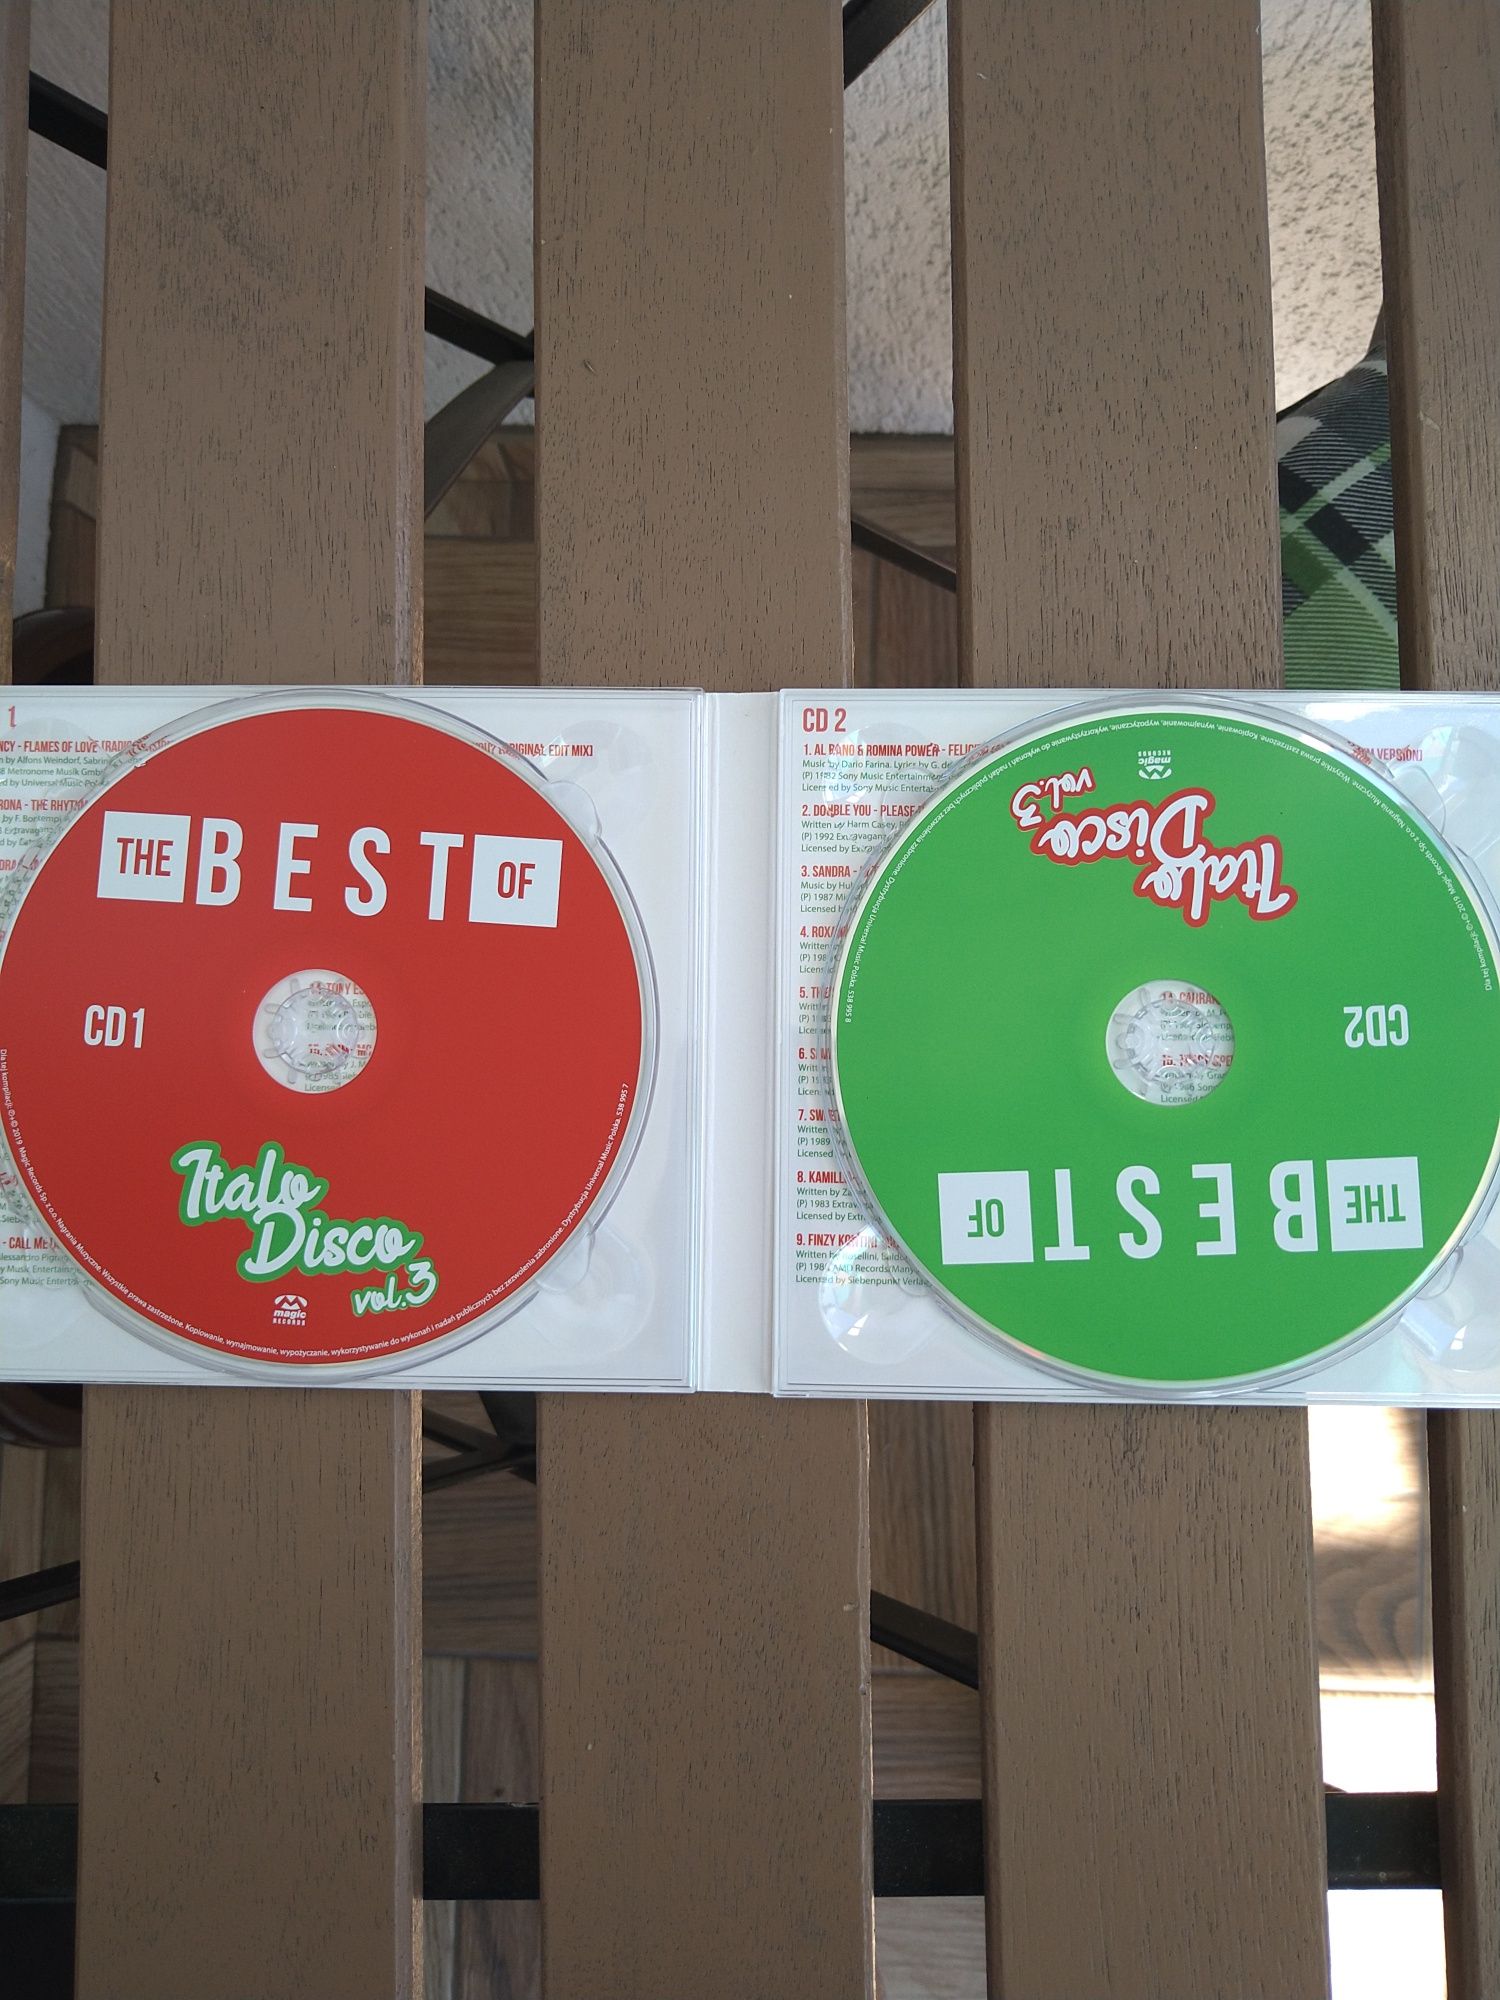 płyta CD the best od italo disco vol 3